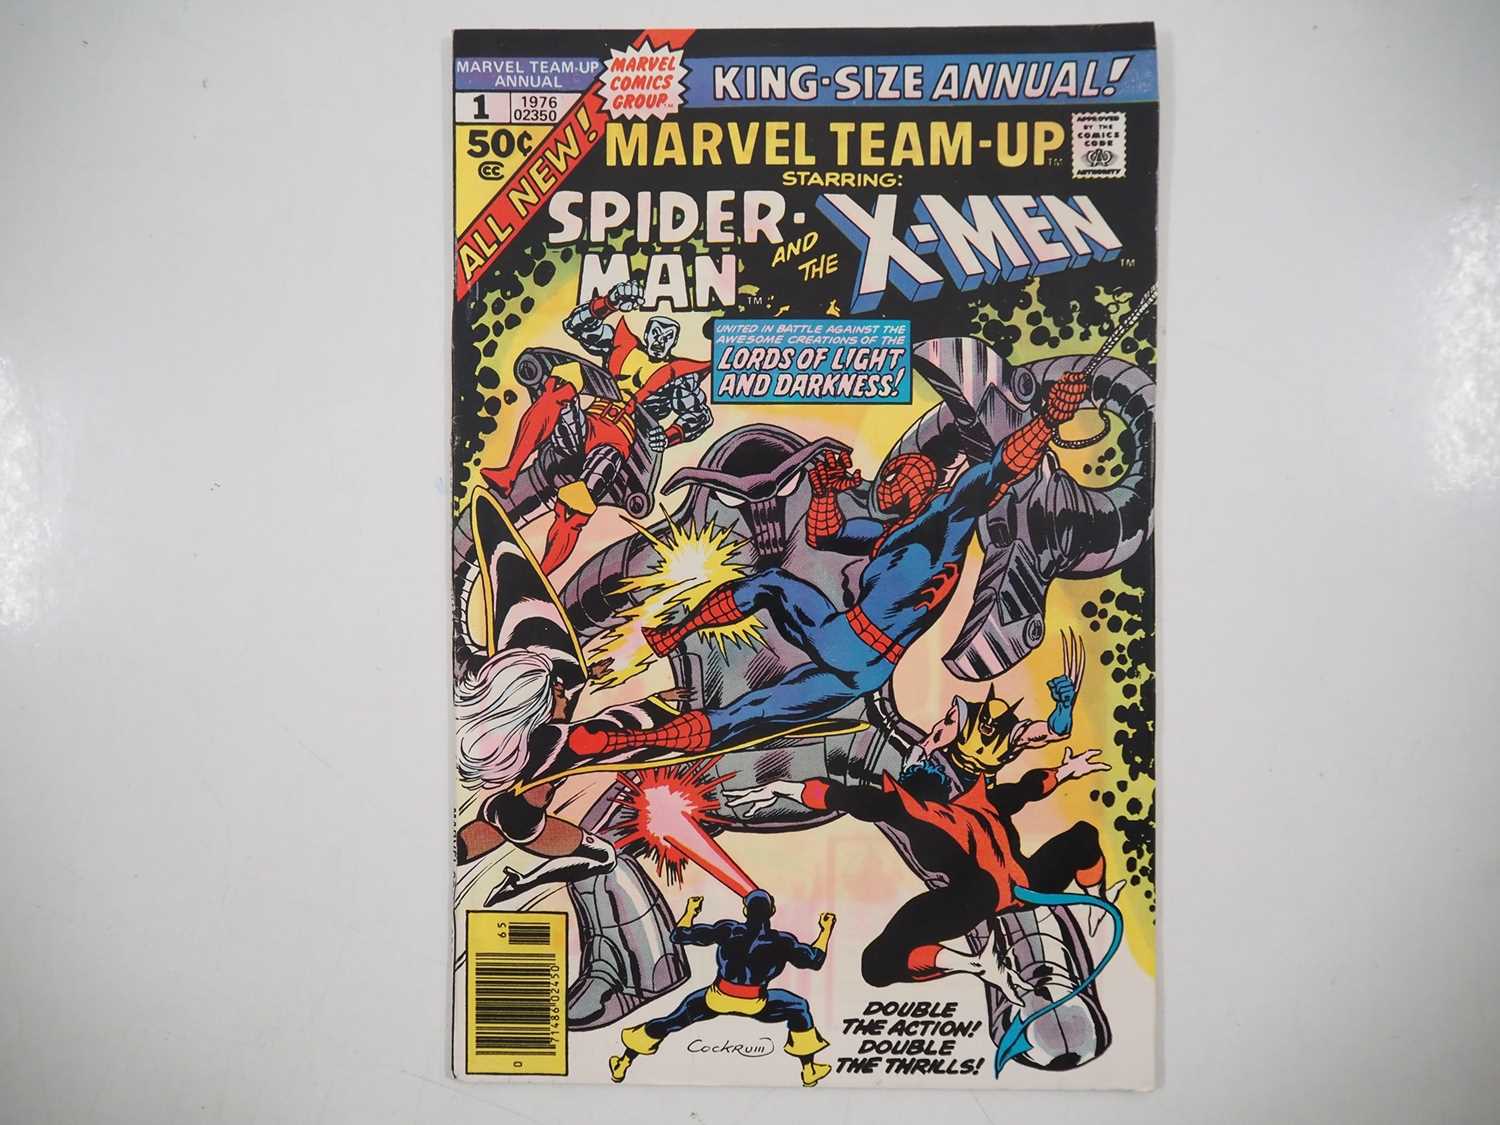 MARVEL TEAM-UP: SPIDER-MAN & X-MEN KING-SIZE ANNUAL #1 - (1976 - MARVEL) - Spider-Man & the 'New'